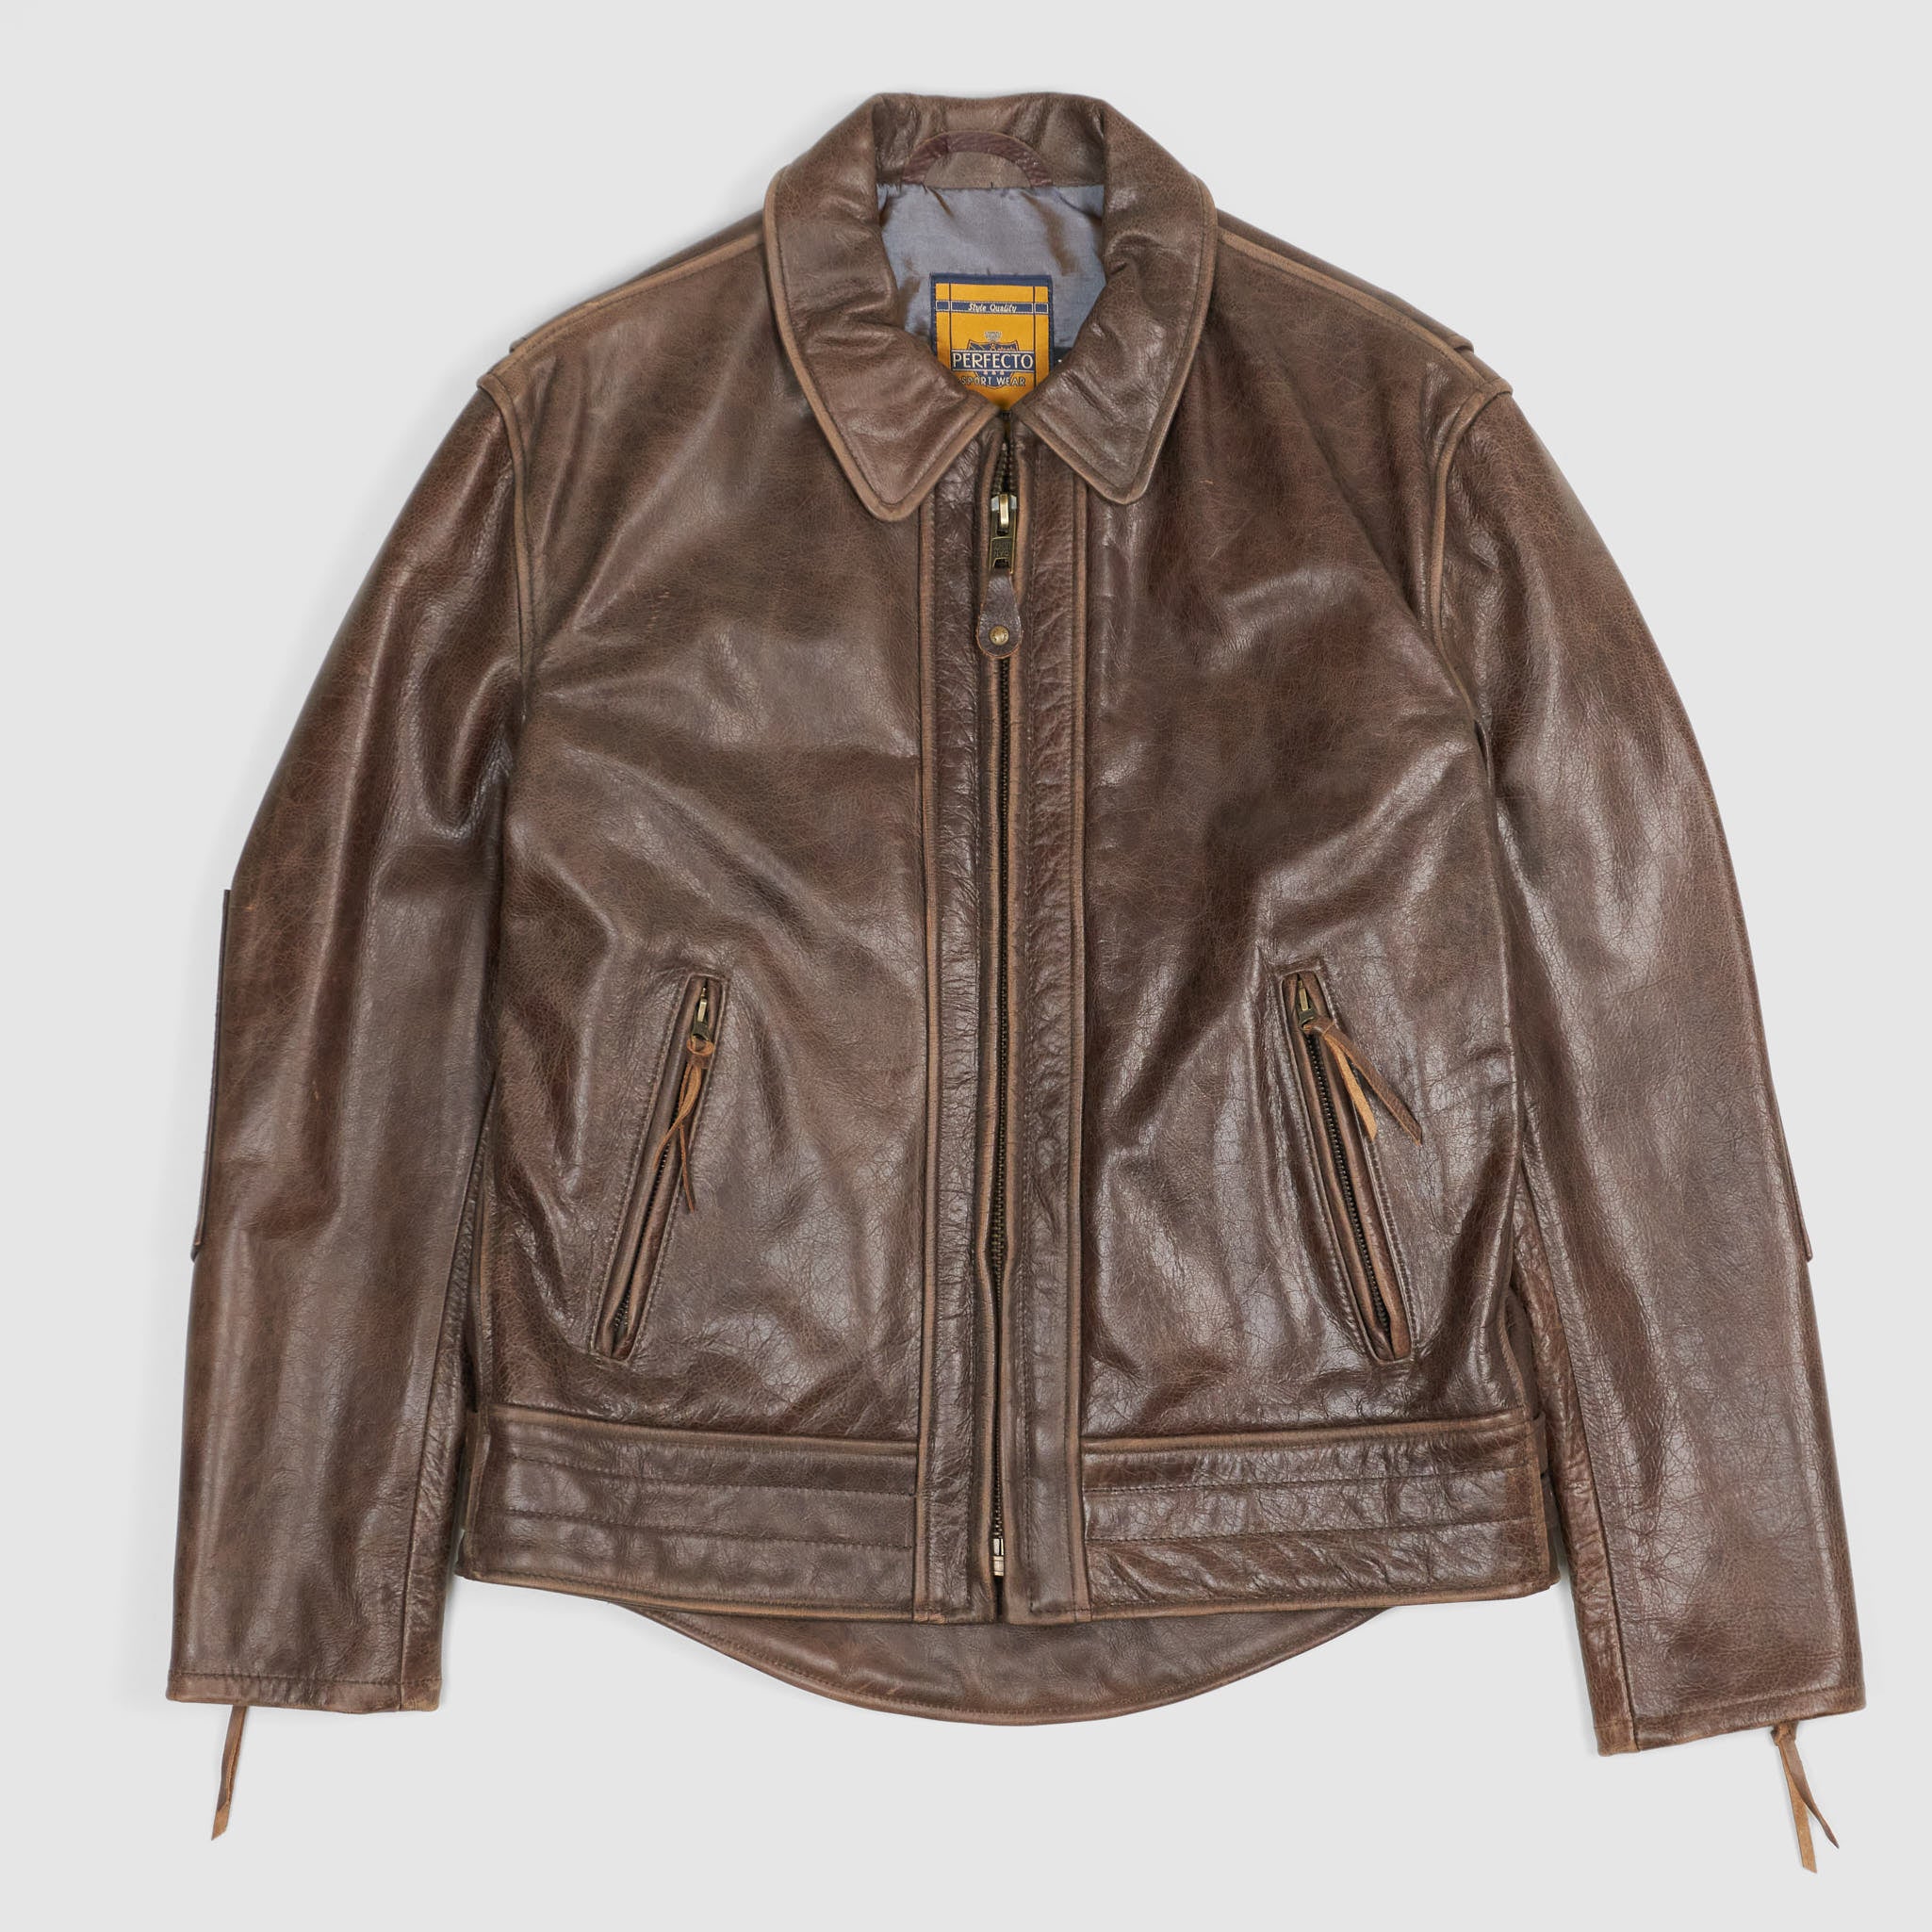 Schott N.Y.C. Antique Leather Biker Jacket - DeeCee style